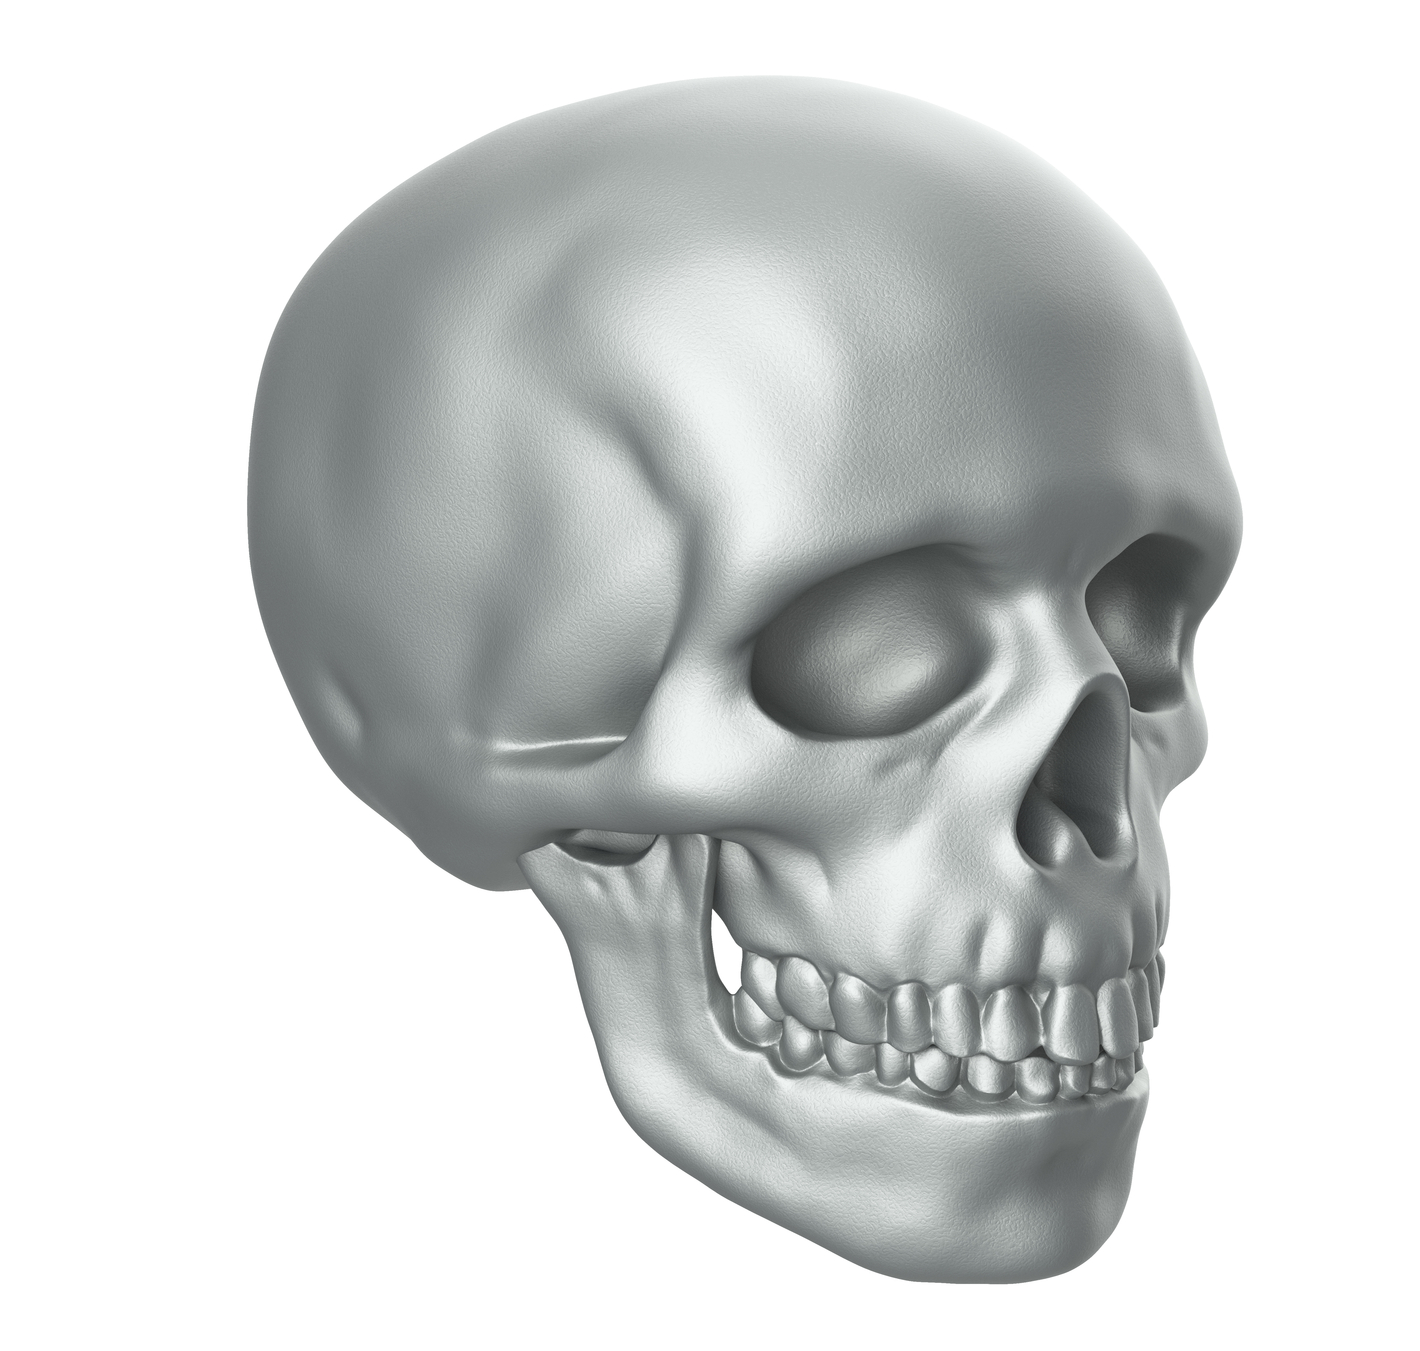 Cranial Vault Remodeling & Reconstruction